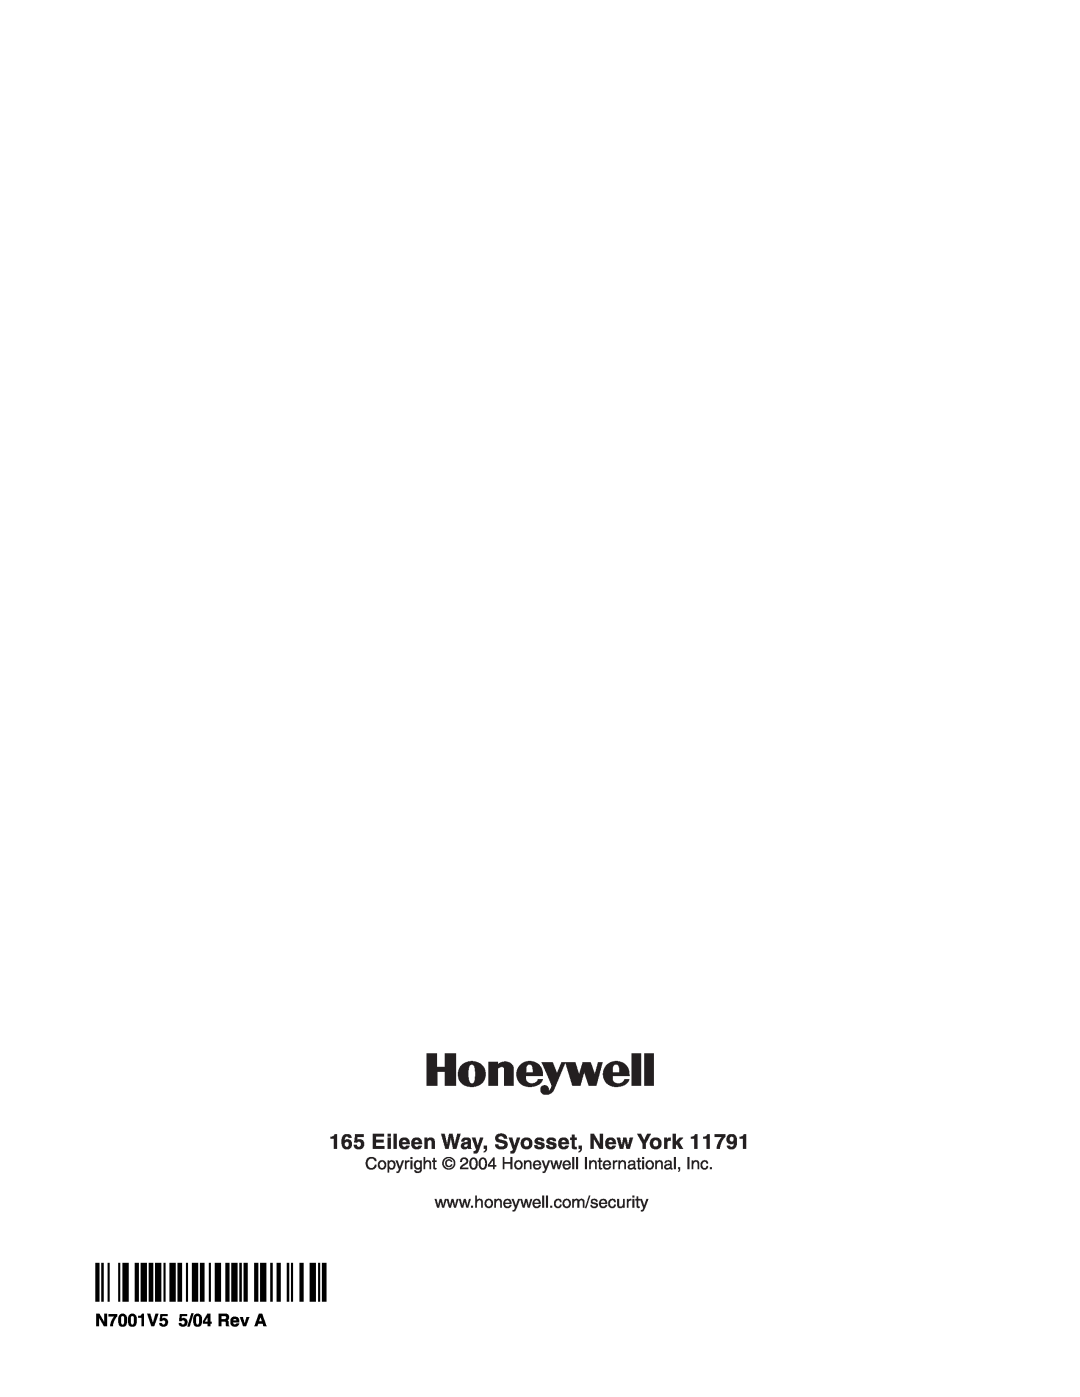 Honeywell ZyAIR G-3000, 3.5 manual Eileen Way, Syosset, New York, ¬19+l, N7001V5 5/04 Rev A 